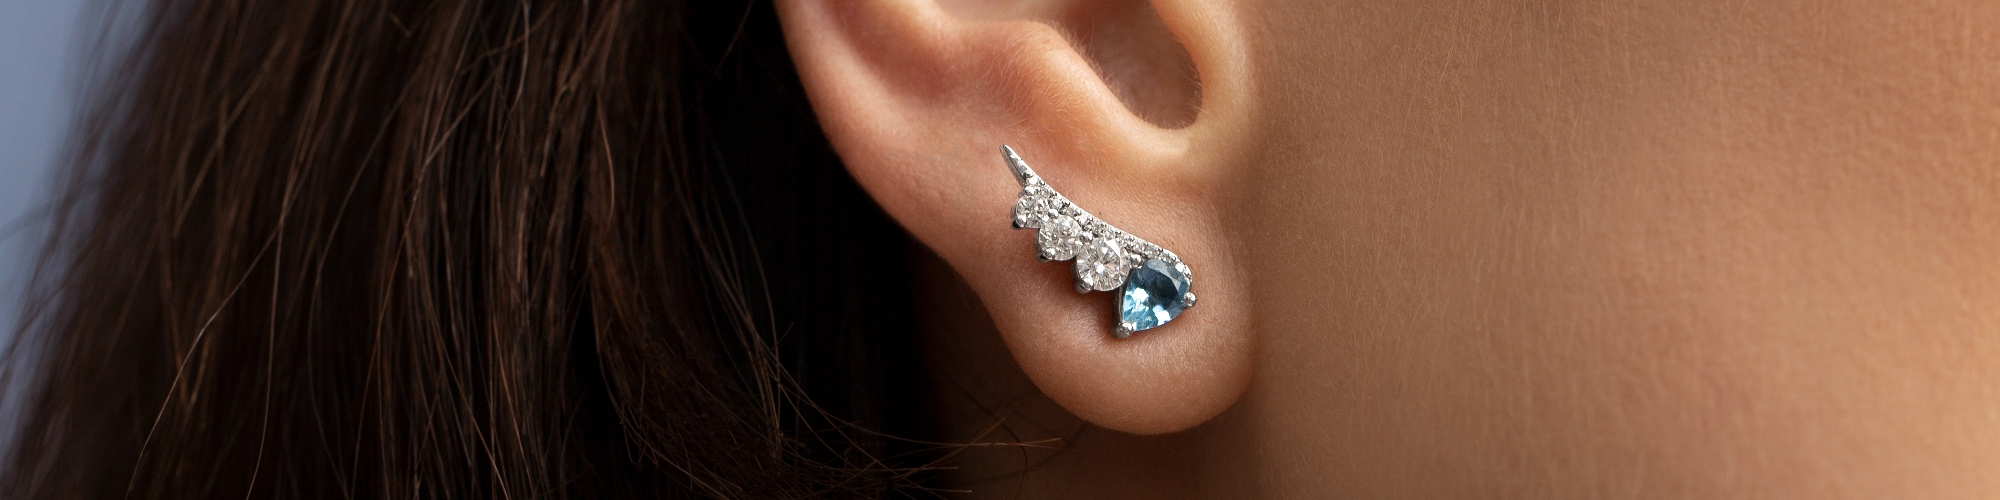 Win a pair of diamond earrings worth £1,500